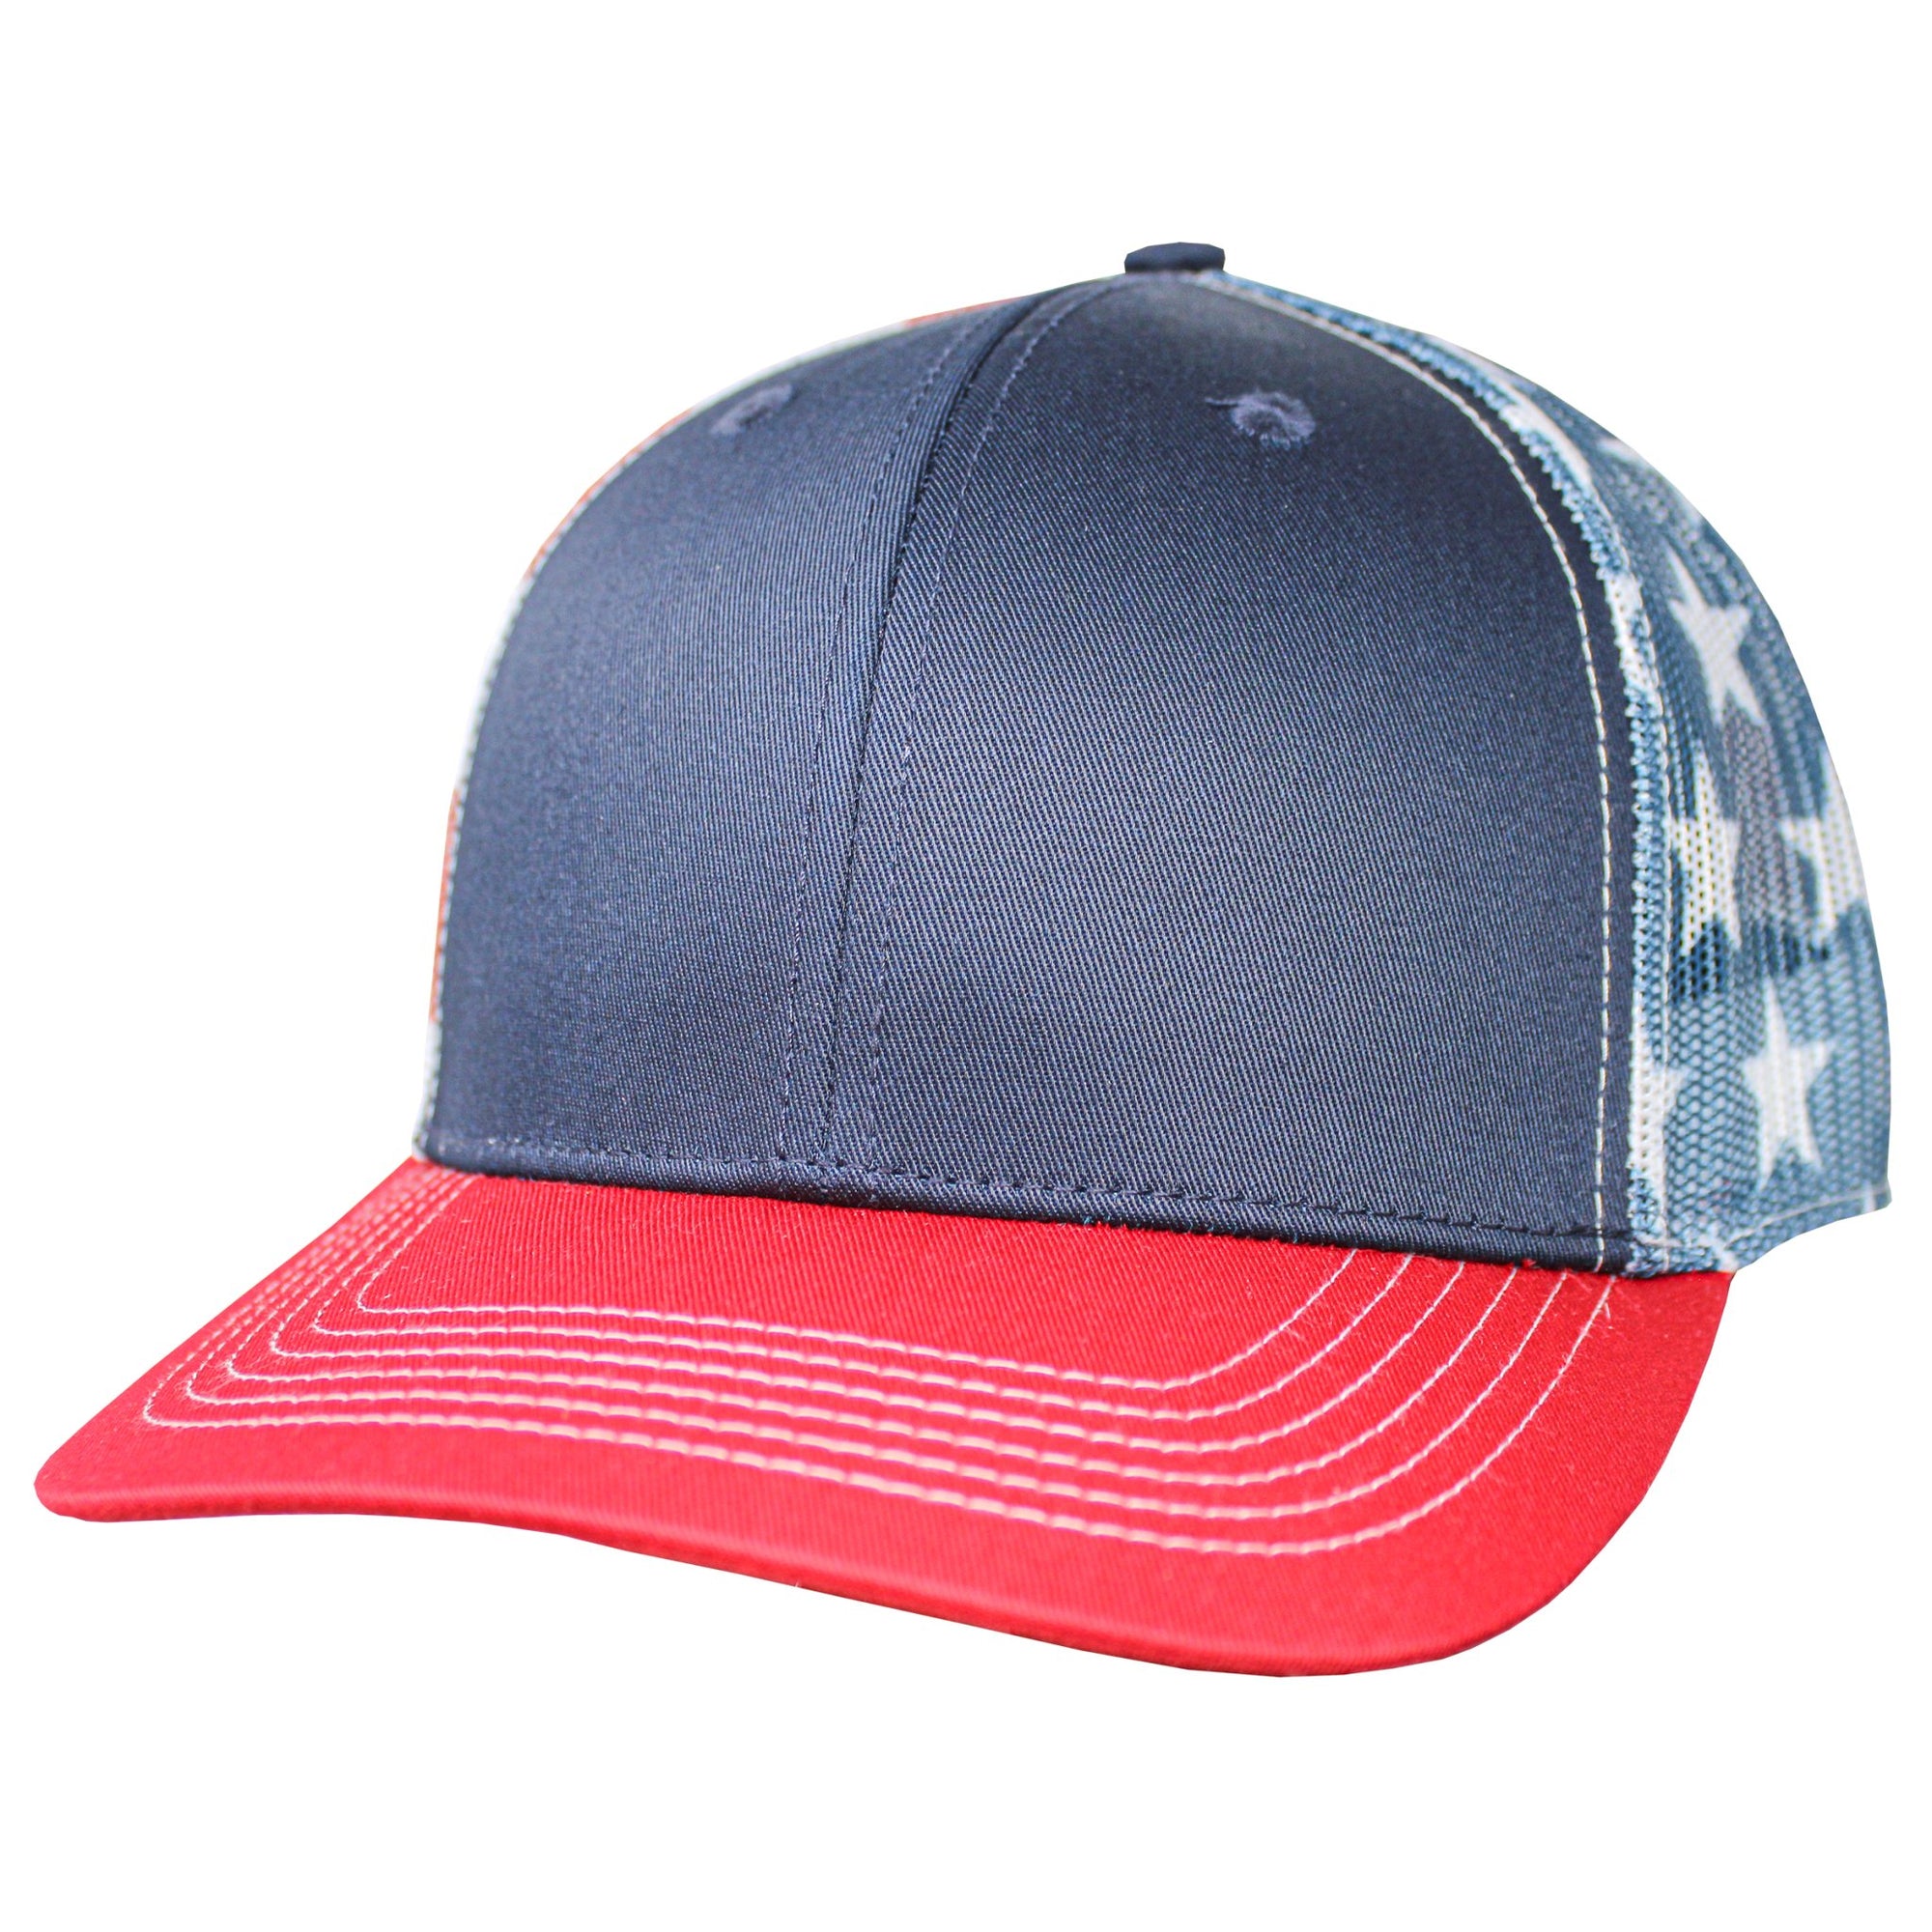 Blank Headwear - BC23 / 6 Panel Performance Trucker Cap - USA - Black Cat MFG - Hat